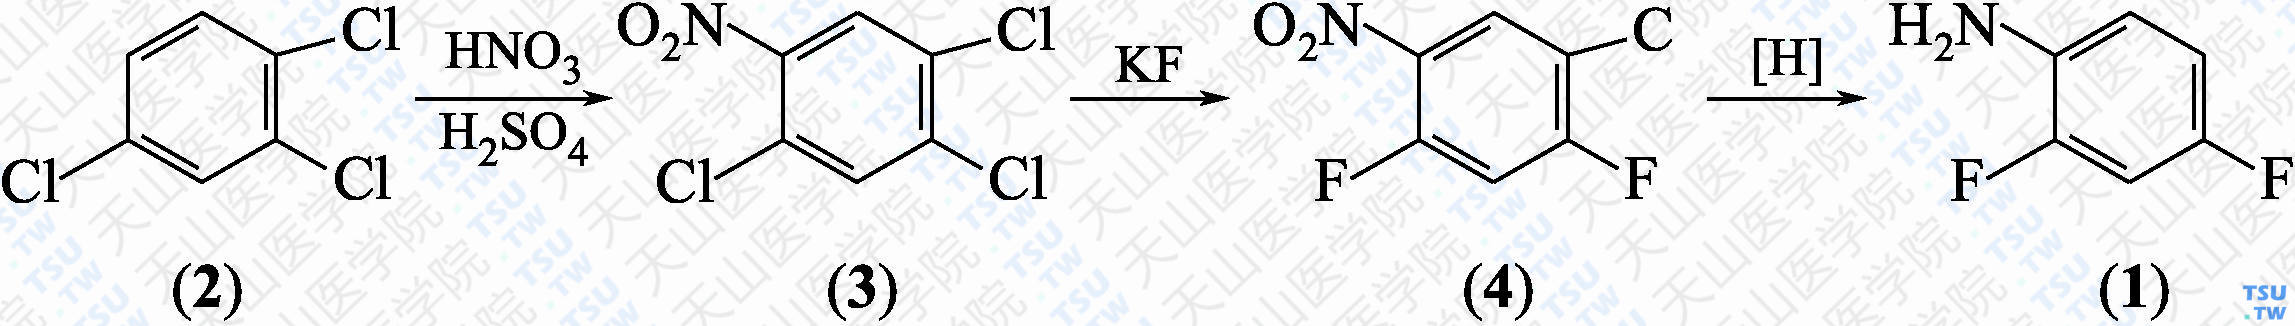 2，4-二氟苯胺（分子式：C<sub>6</sub>H<sub>5</sub>F<sub>2</sub>N）的合成方法路线及其结构式